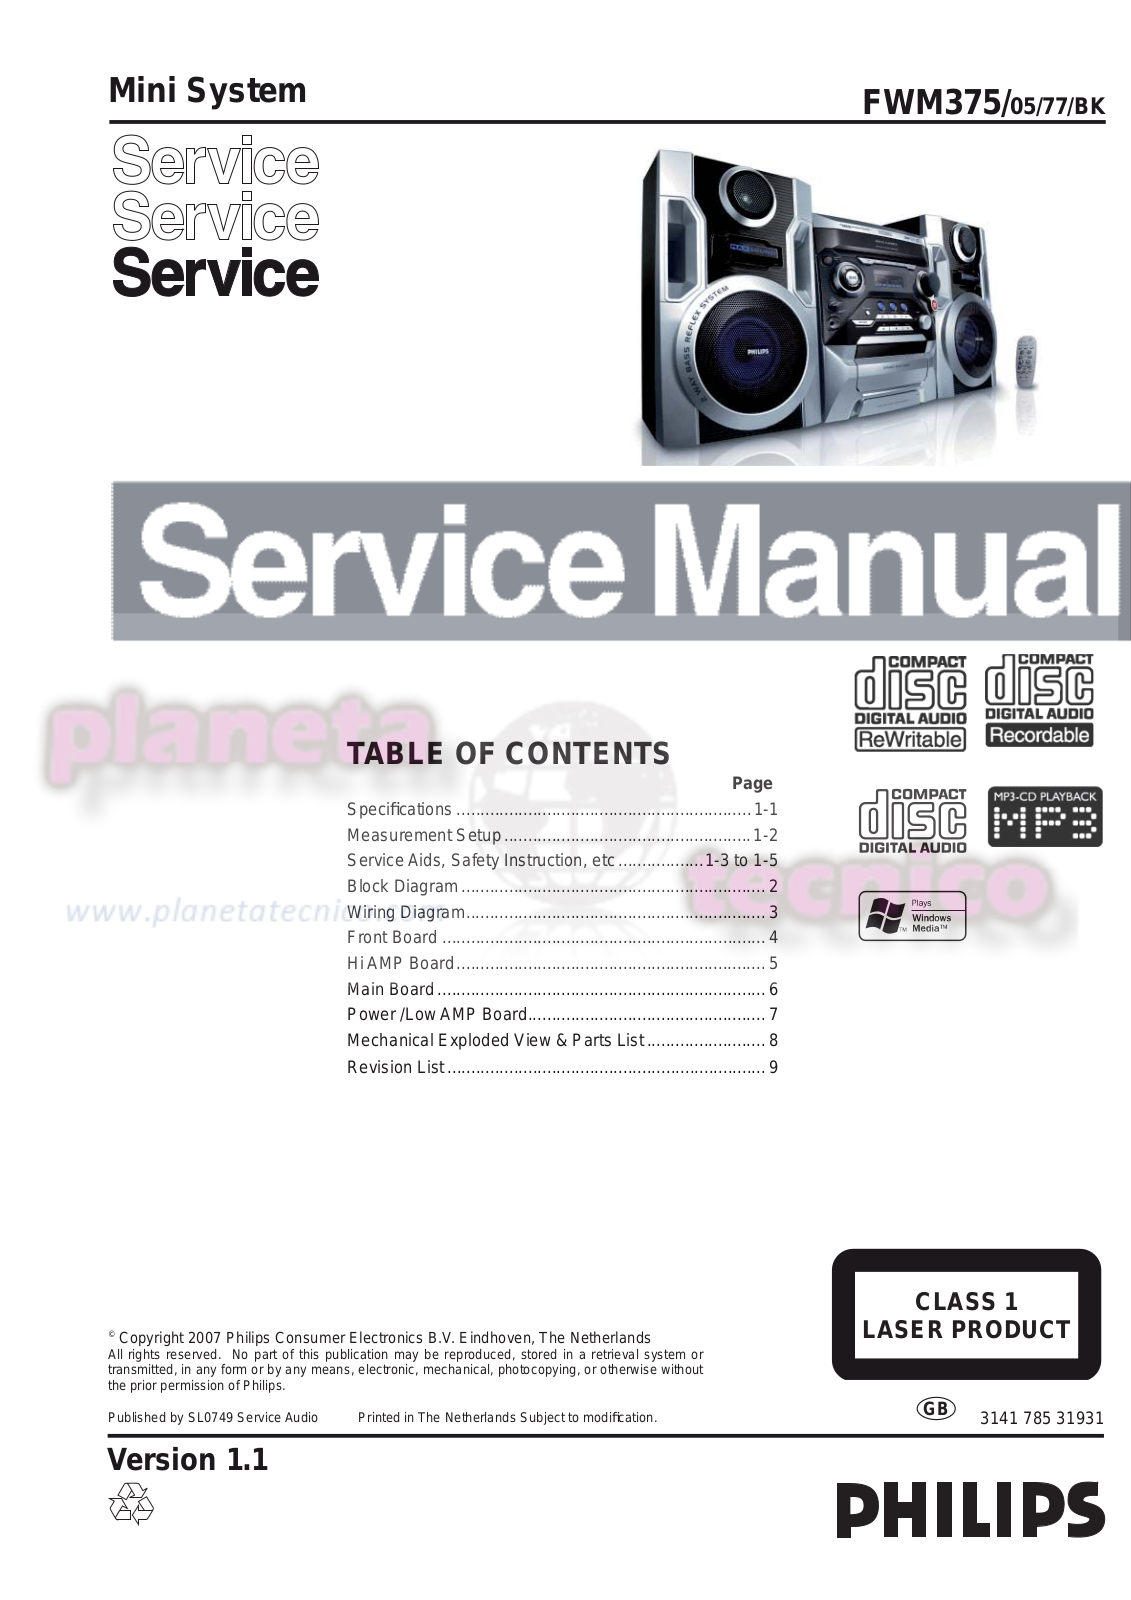 Philips FWM-375 Service Manual